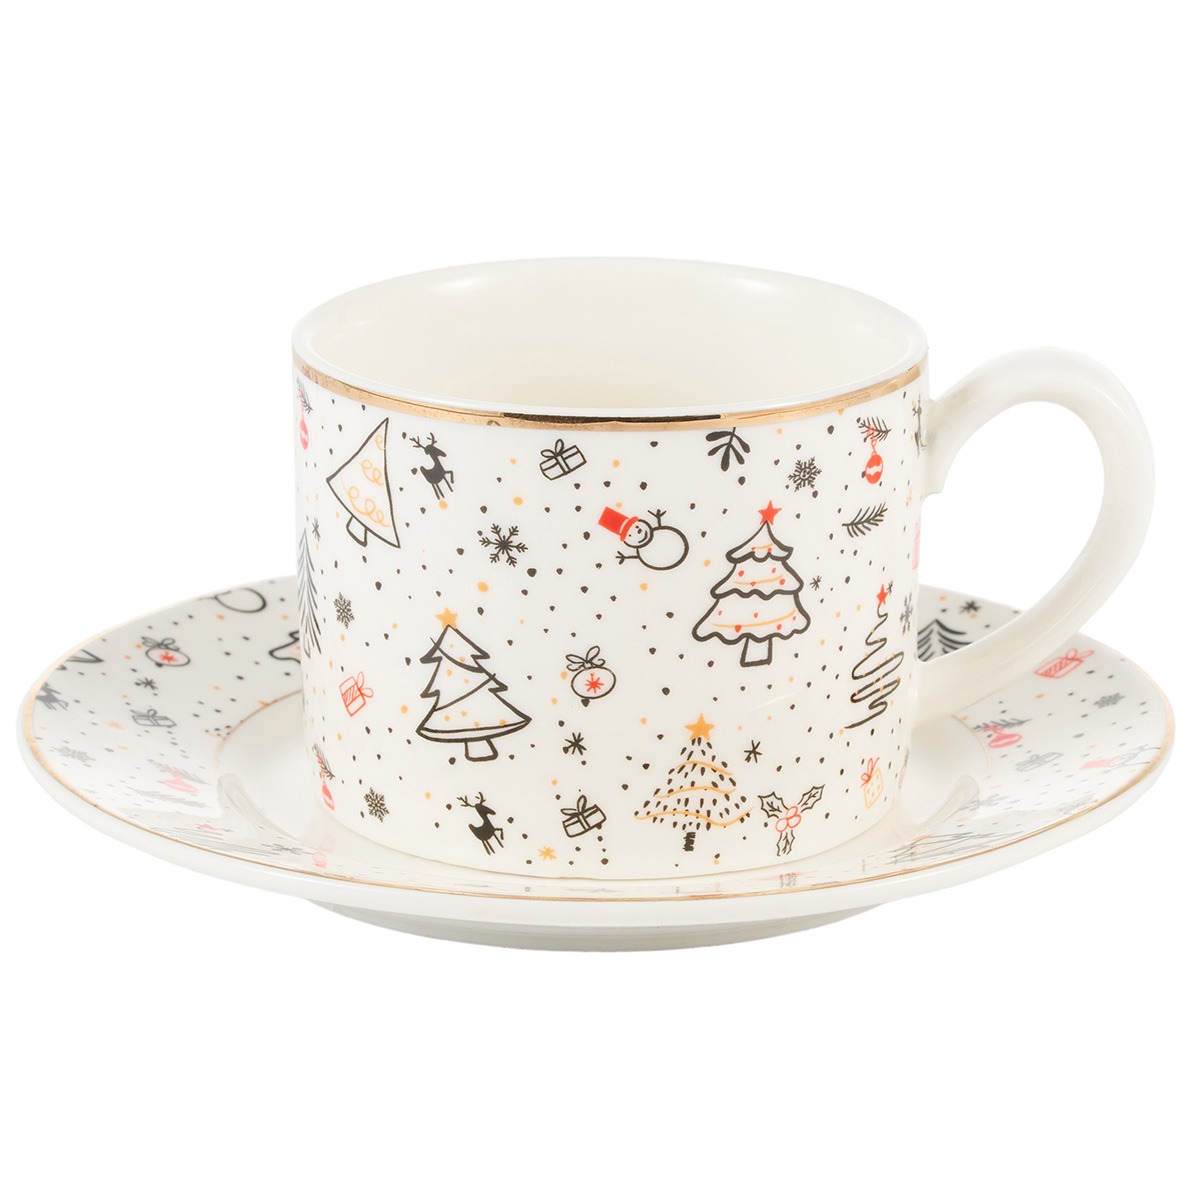 Чайная пара Gipfel Christmas фарфор белый чашка 250 мл, блюдце 14 см пара чайная чашка блюдце 350 мл tudor tu9999 4